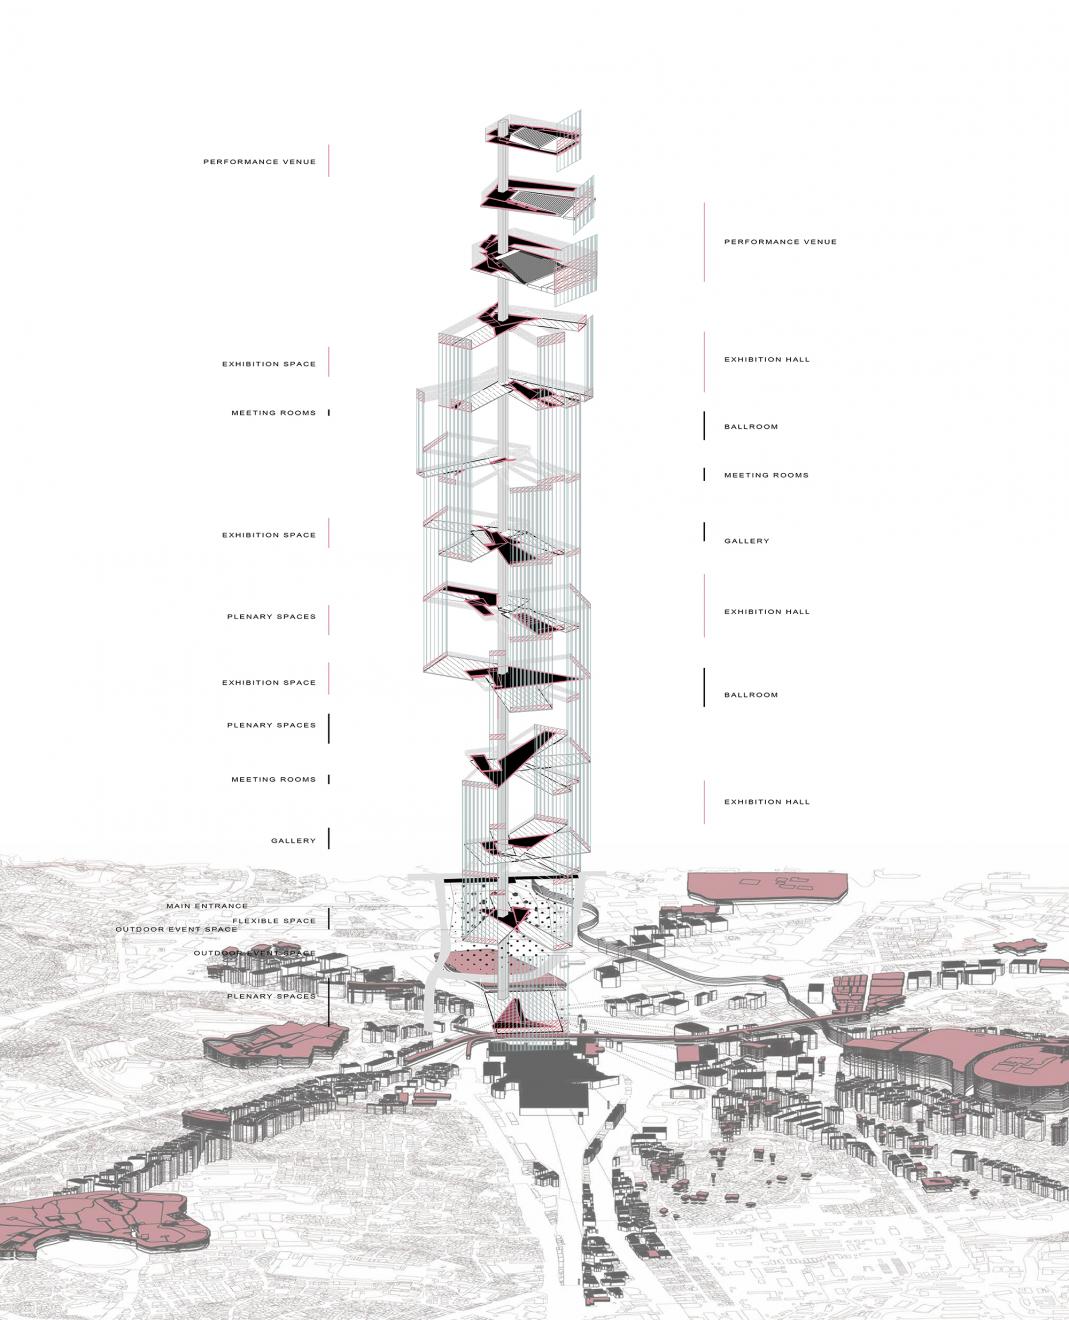 DAB Student Project: Relational Architecture, by Daniel Sagurit, Hana Lee, Shuang Wu, Andreas Ian Anggabrata & Kimberley Angangan